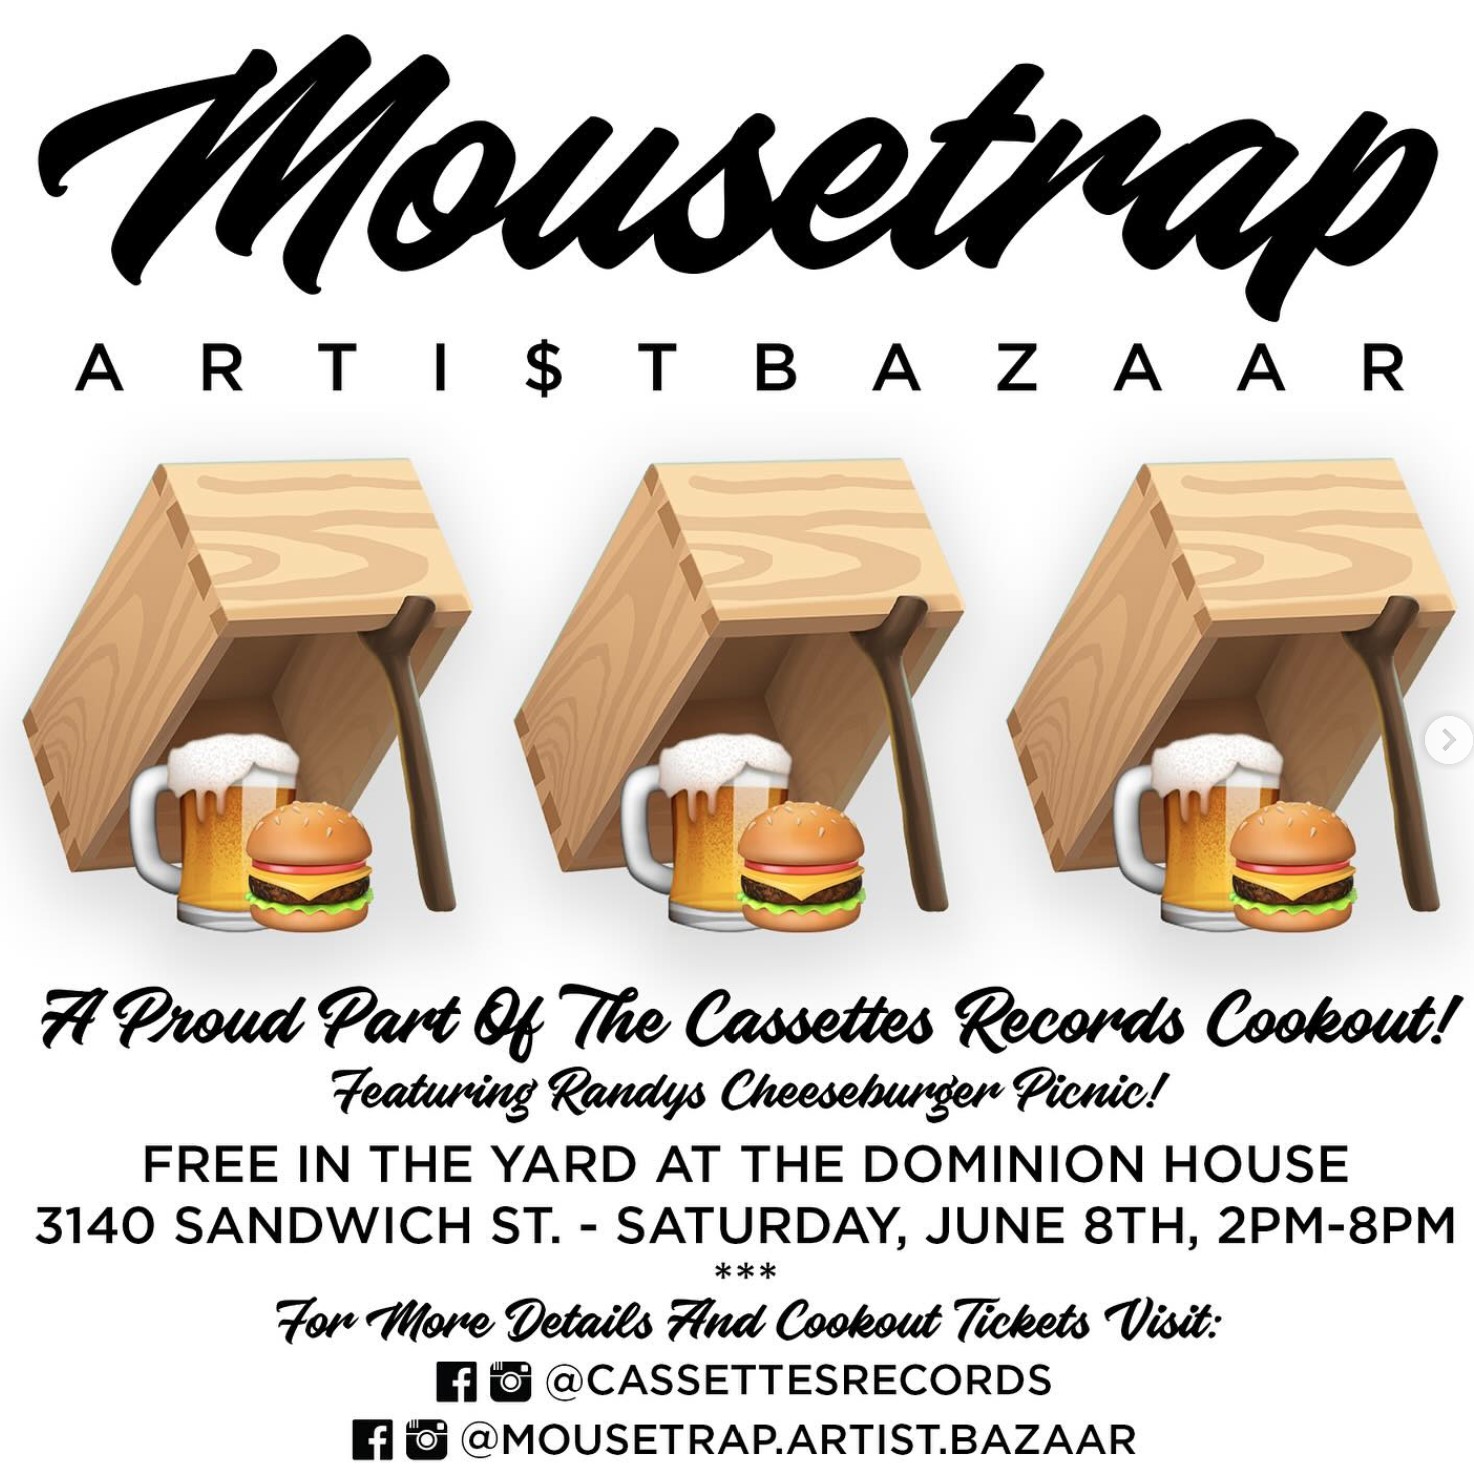 Mousetrap pop-up artist bazaar